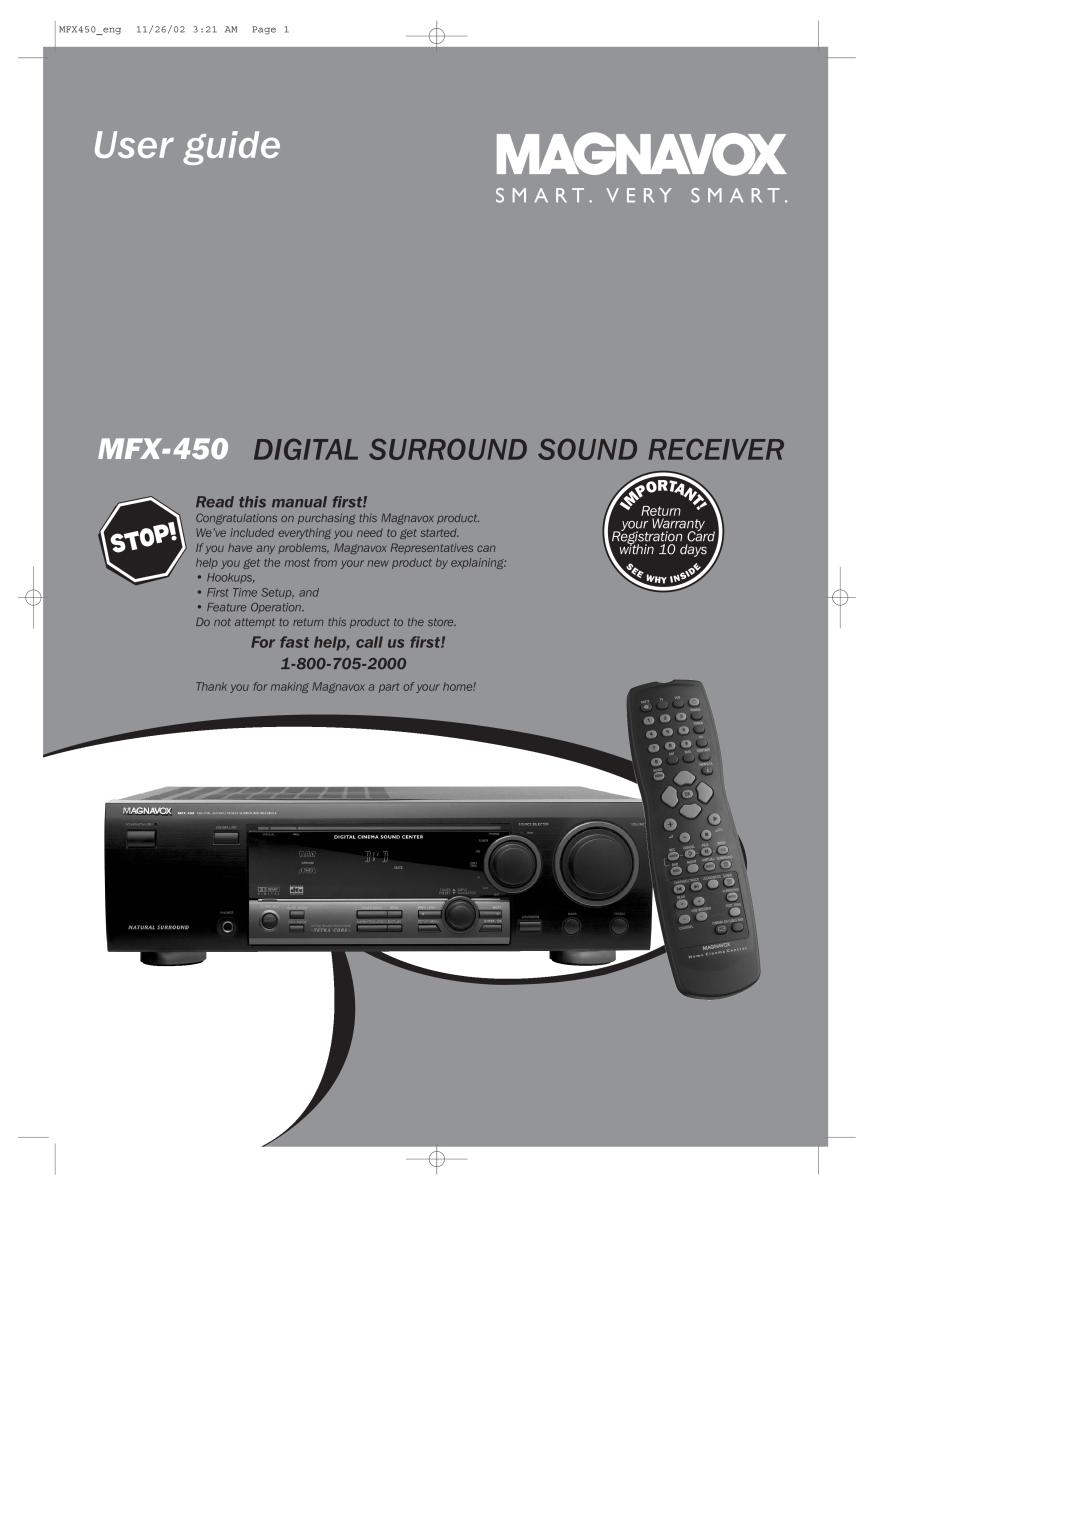 Magnavox MMX450/17 User guide, MFX-450 DIGITAL SURROUND SOUND RECEIVER, S M A R T . V E R Y S M A R T, Feature Operation 